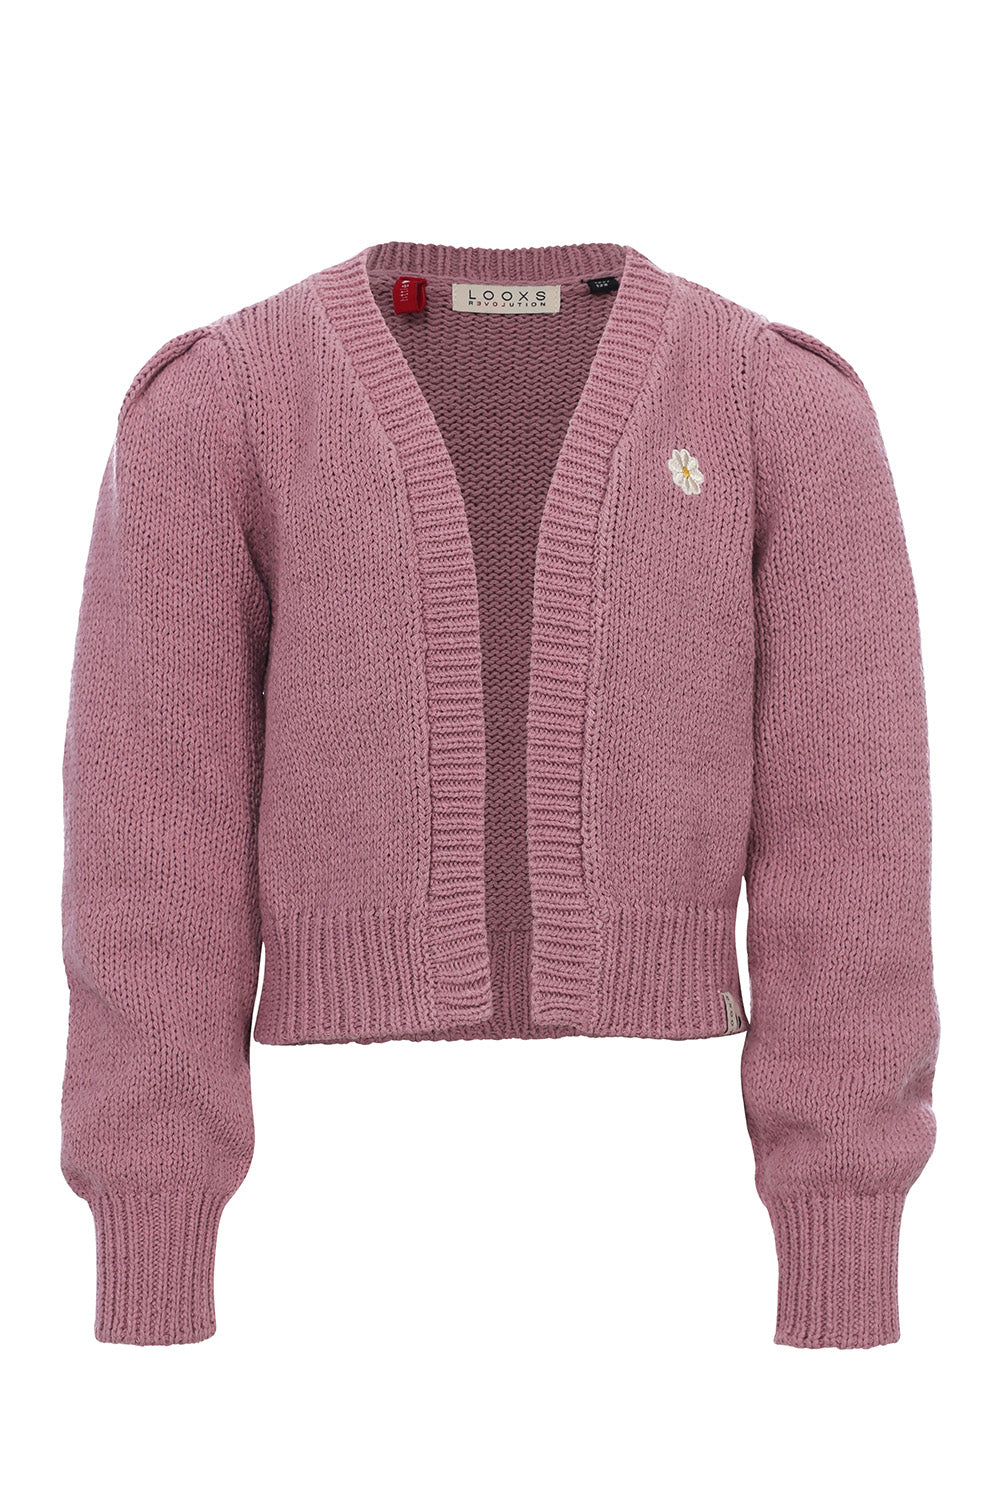 Meisjes Knitted Pullover van LOOXS Little in de kleur Mauve Blush in maat 128.